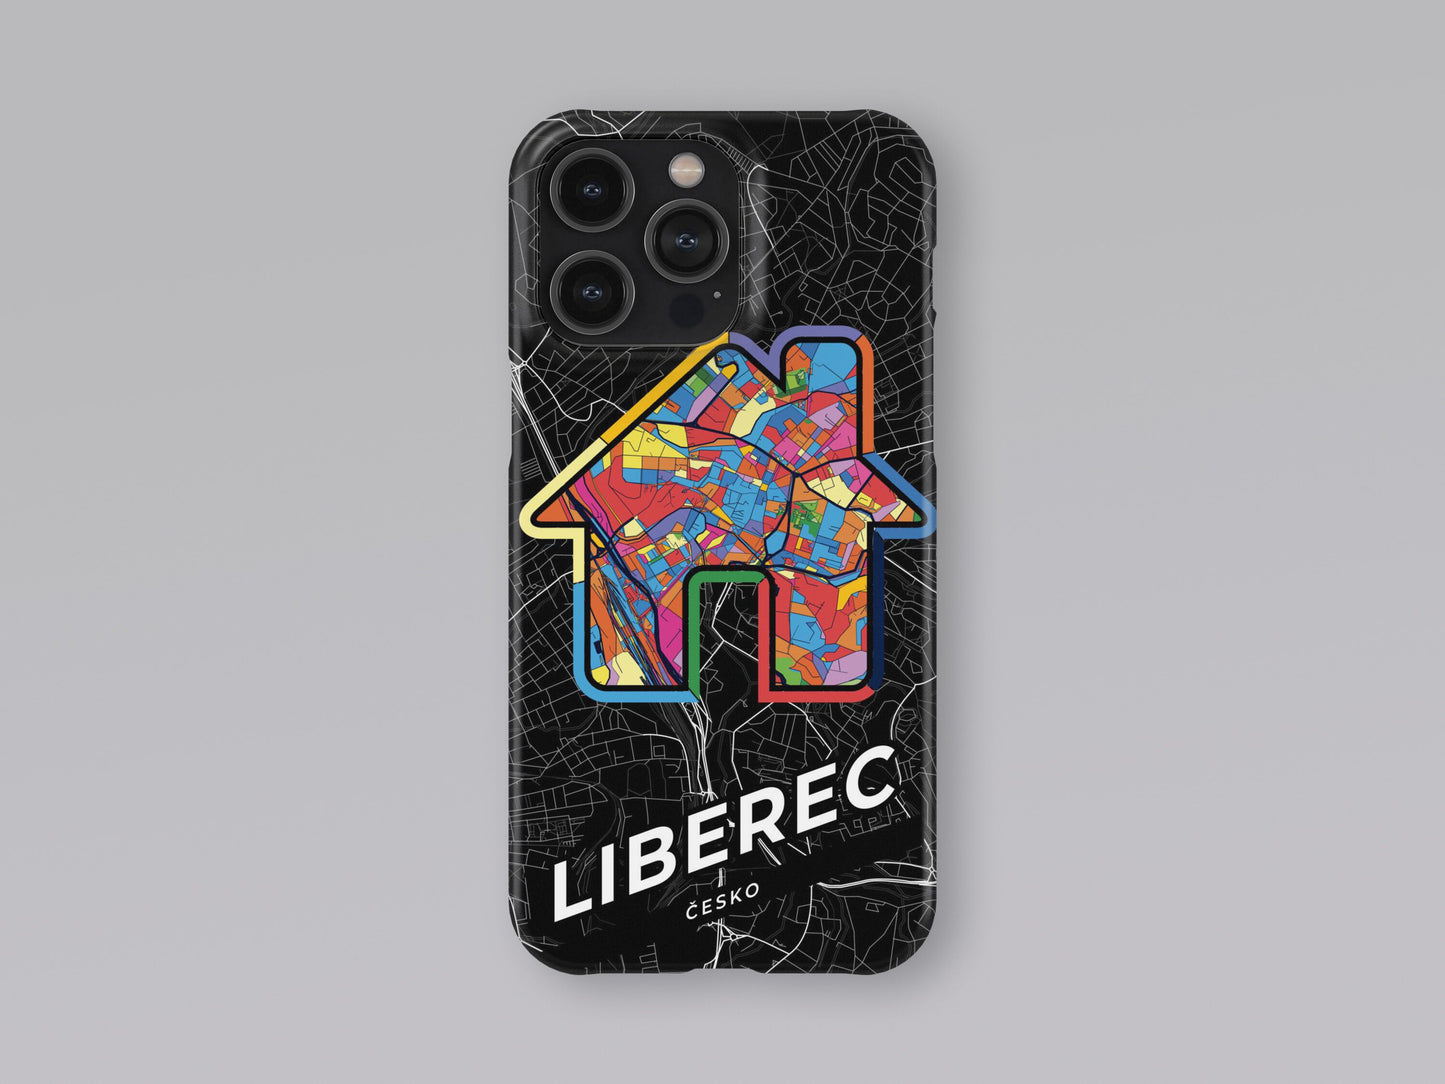 Liberec Česko slim phone case with colorful icon. Birthday, wedding or housewarming gift. Couple match cases. 3